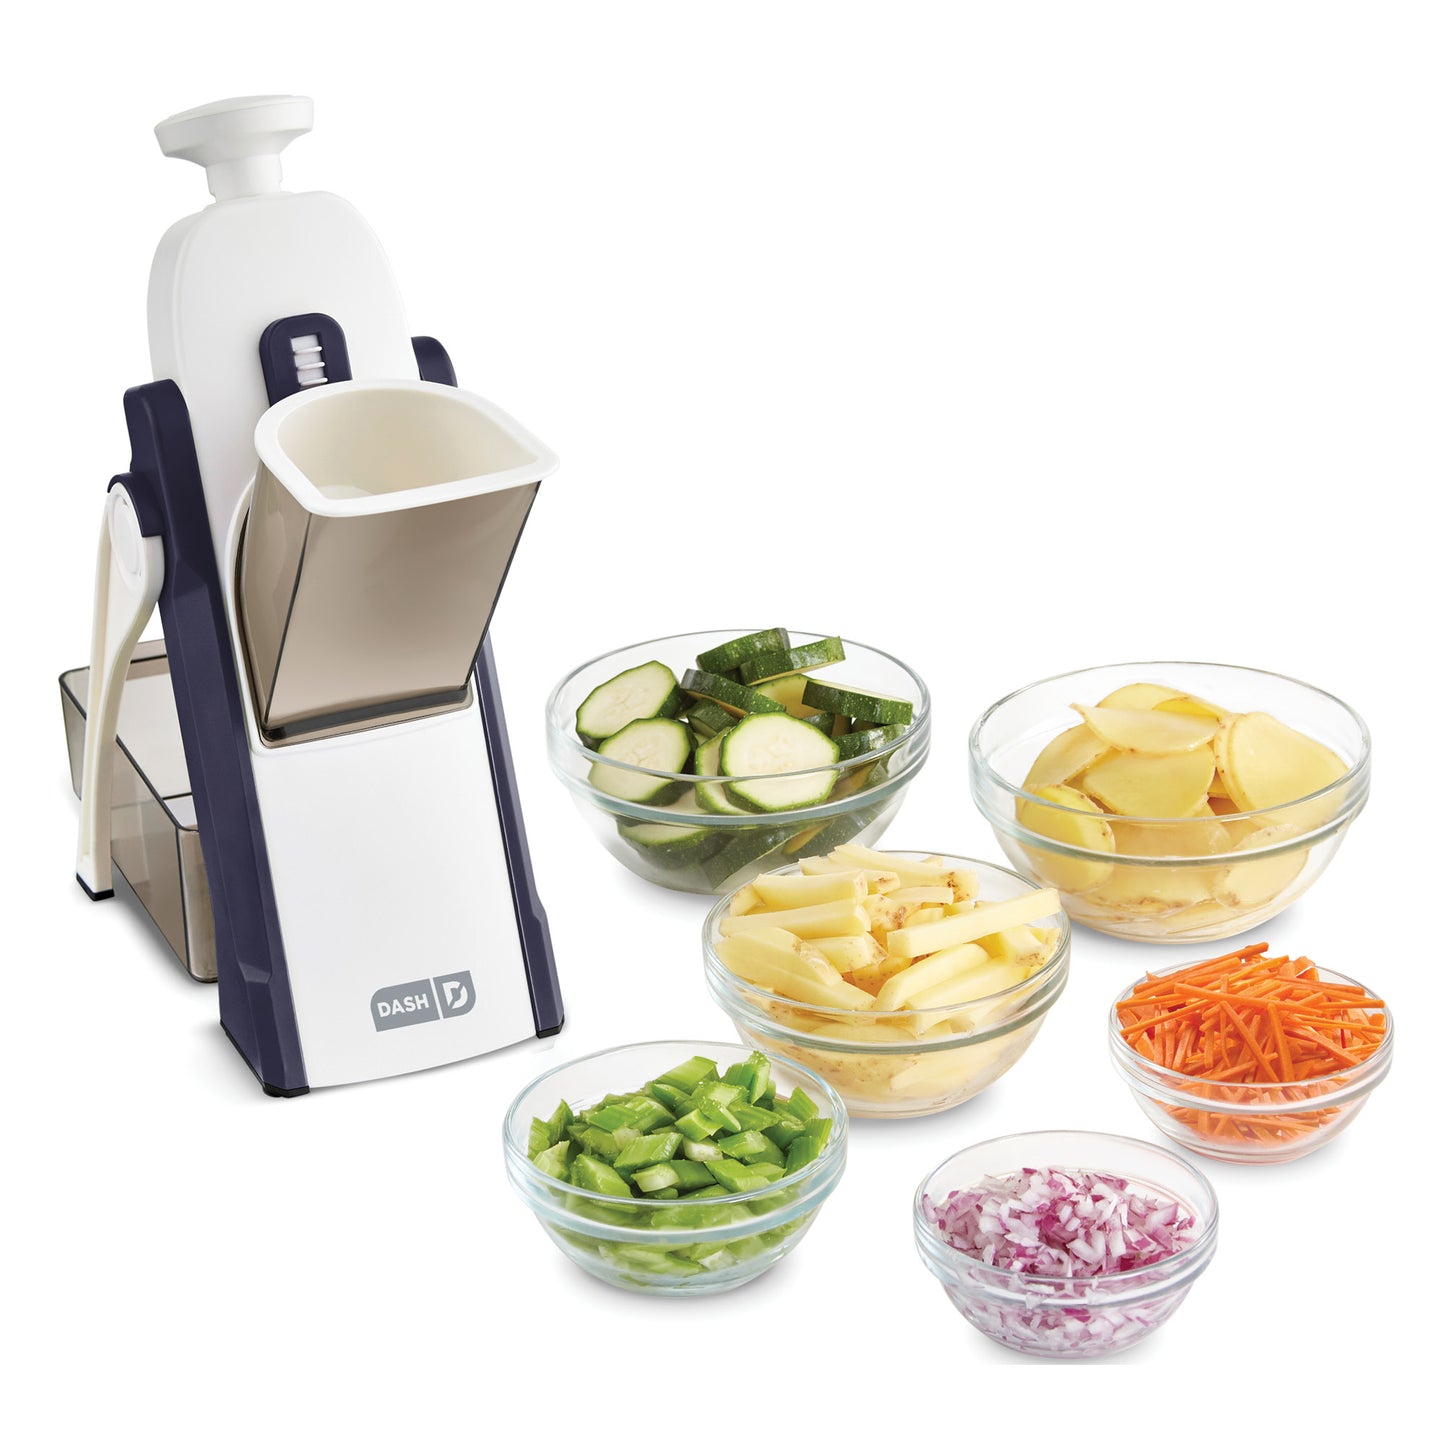 Hifashion Vegetable Mandoline Slicer,professional Salad Machine